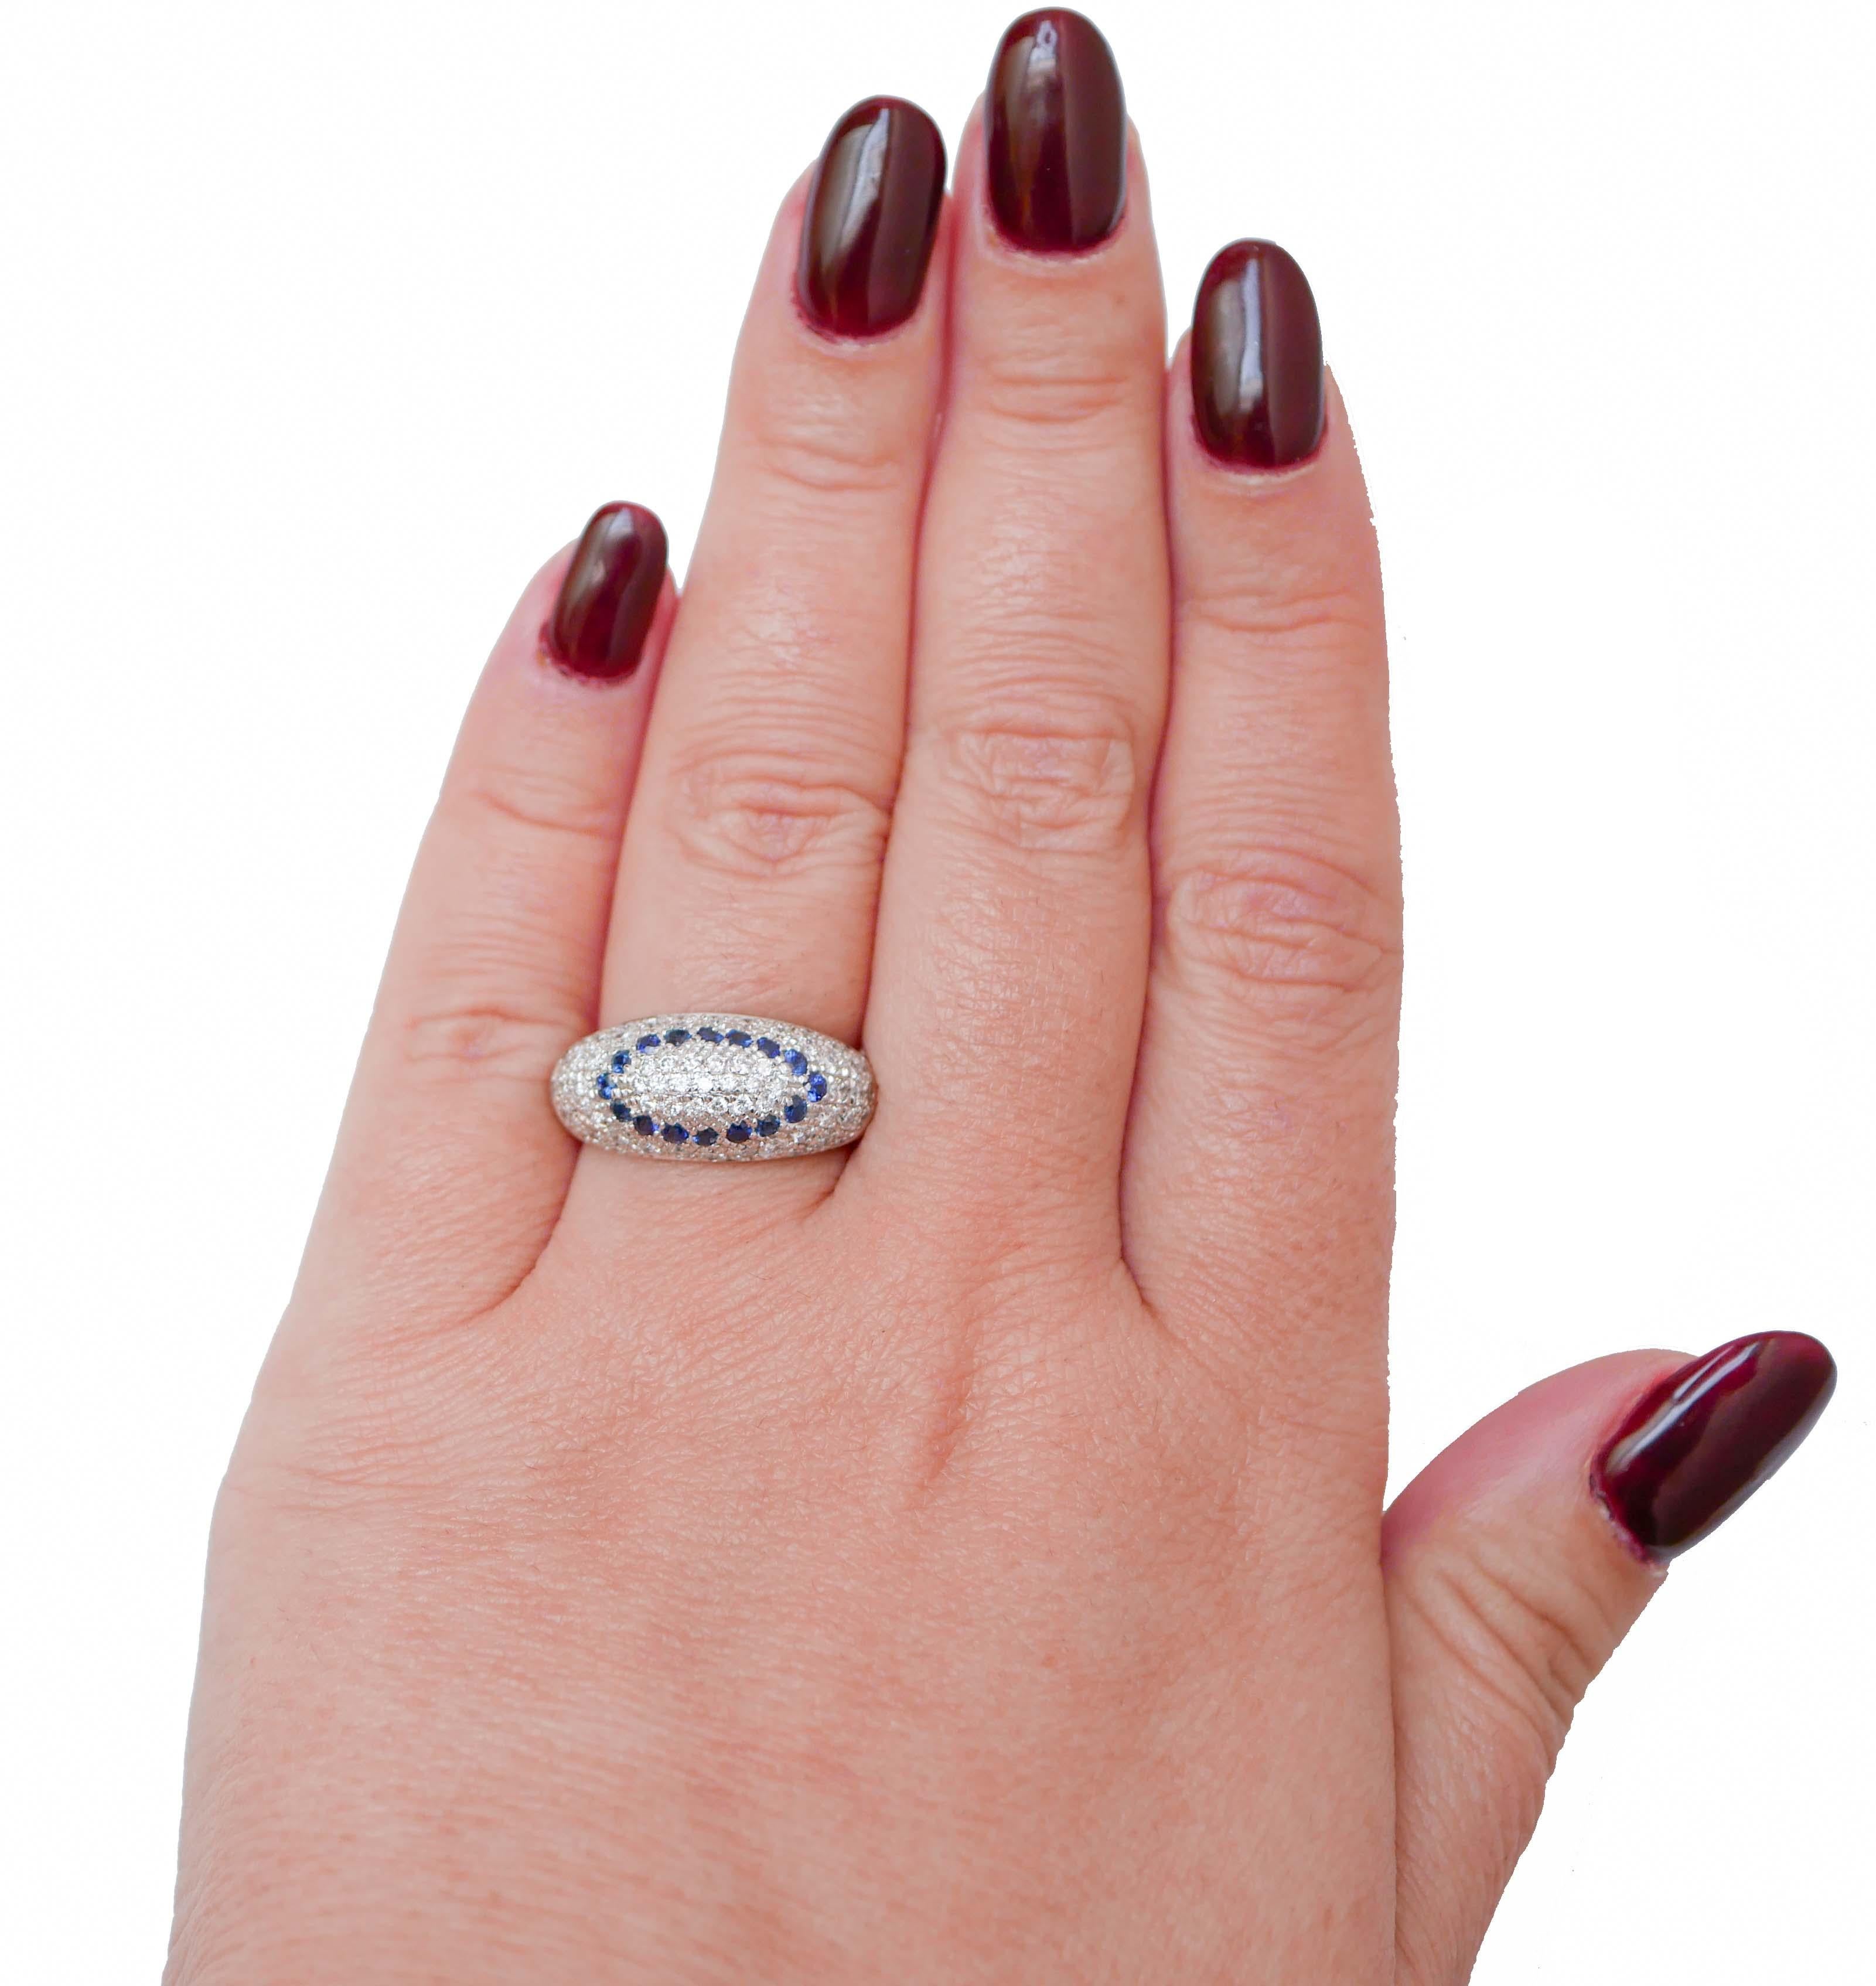 Mixed Cut Sapphires, Diamonds, 18 Karat White Gold Ring. For Sale